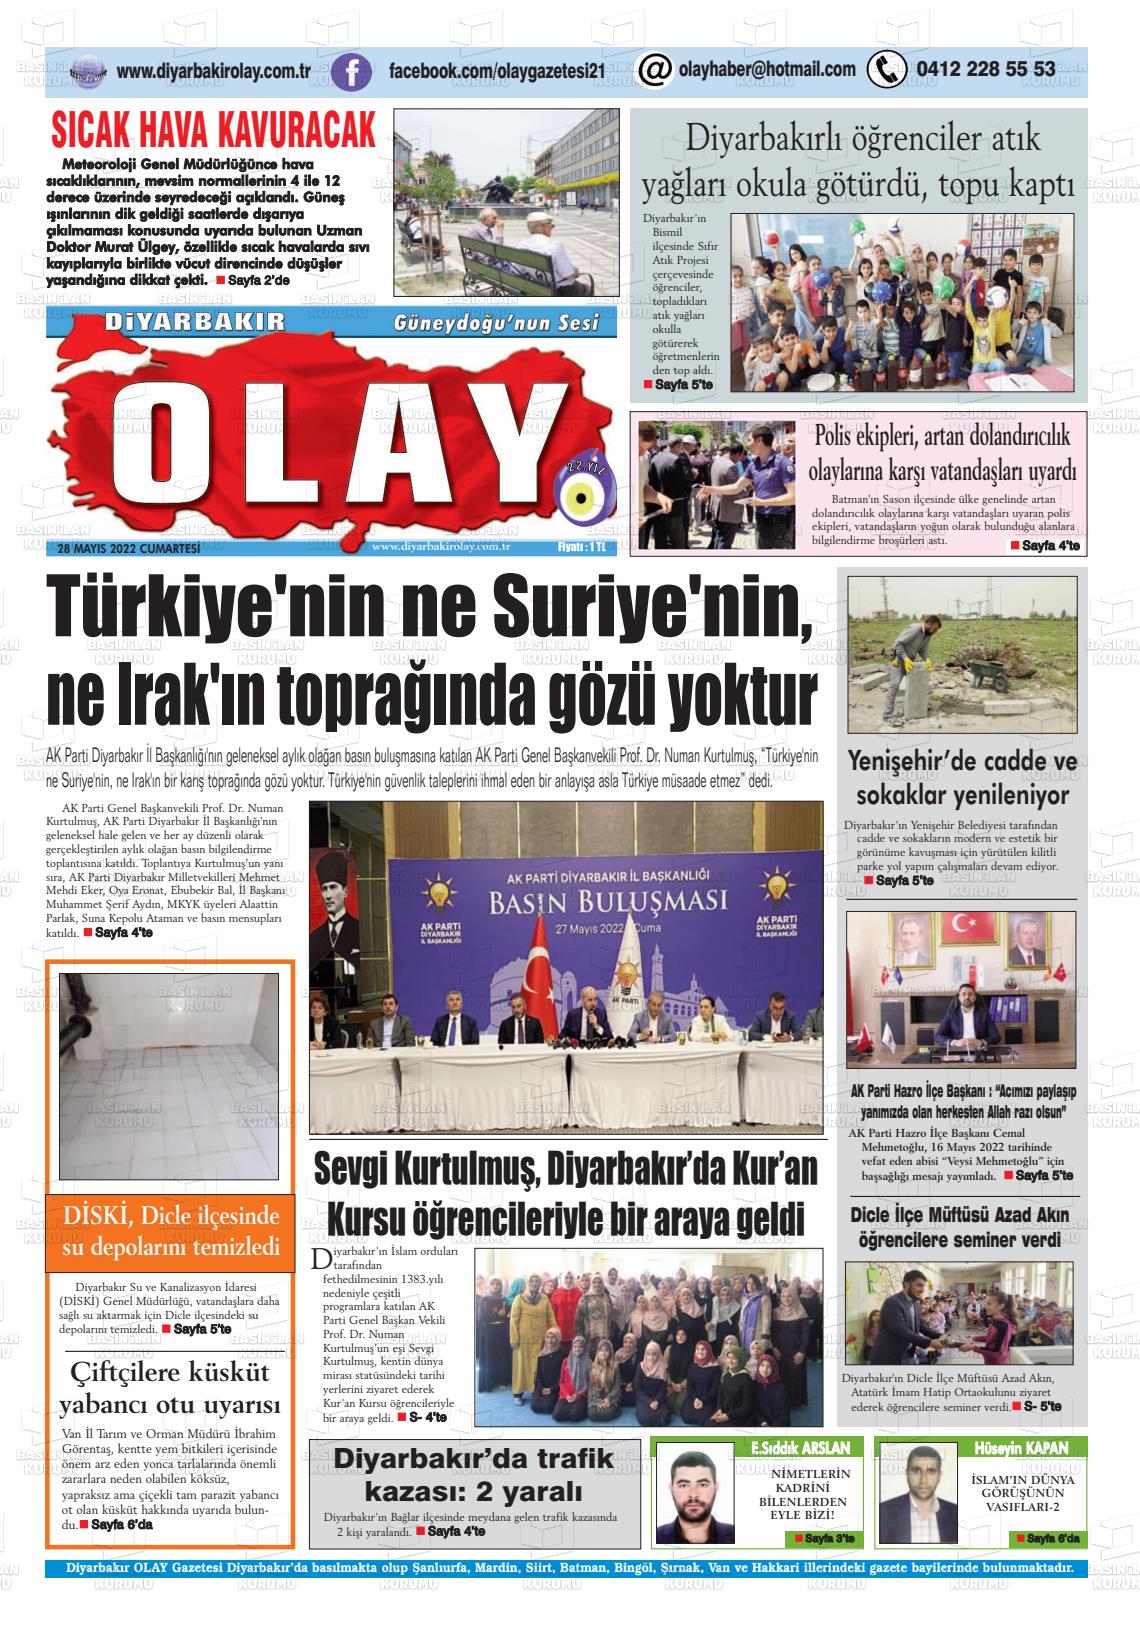 28 Mayıs 2022 Diyarbakir Olay Gazete Manşeti